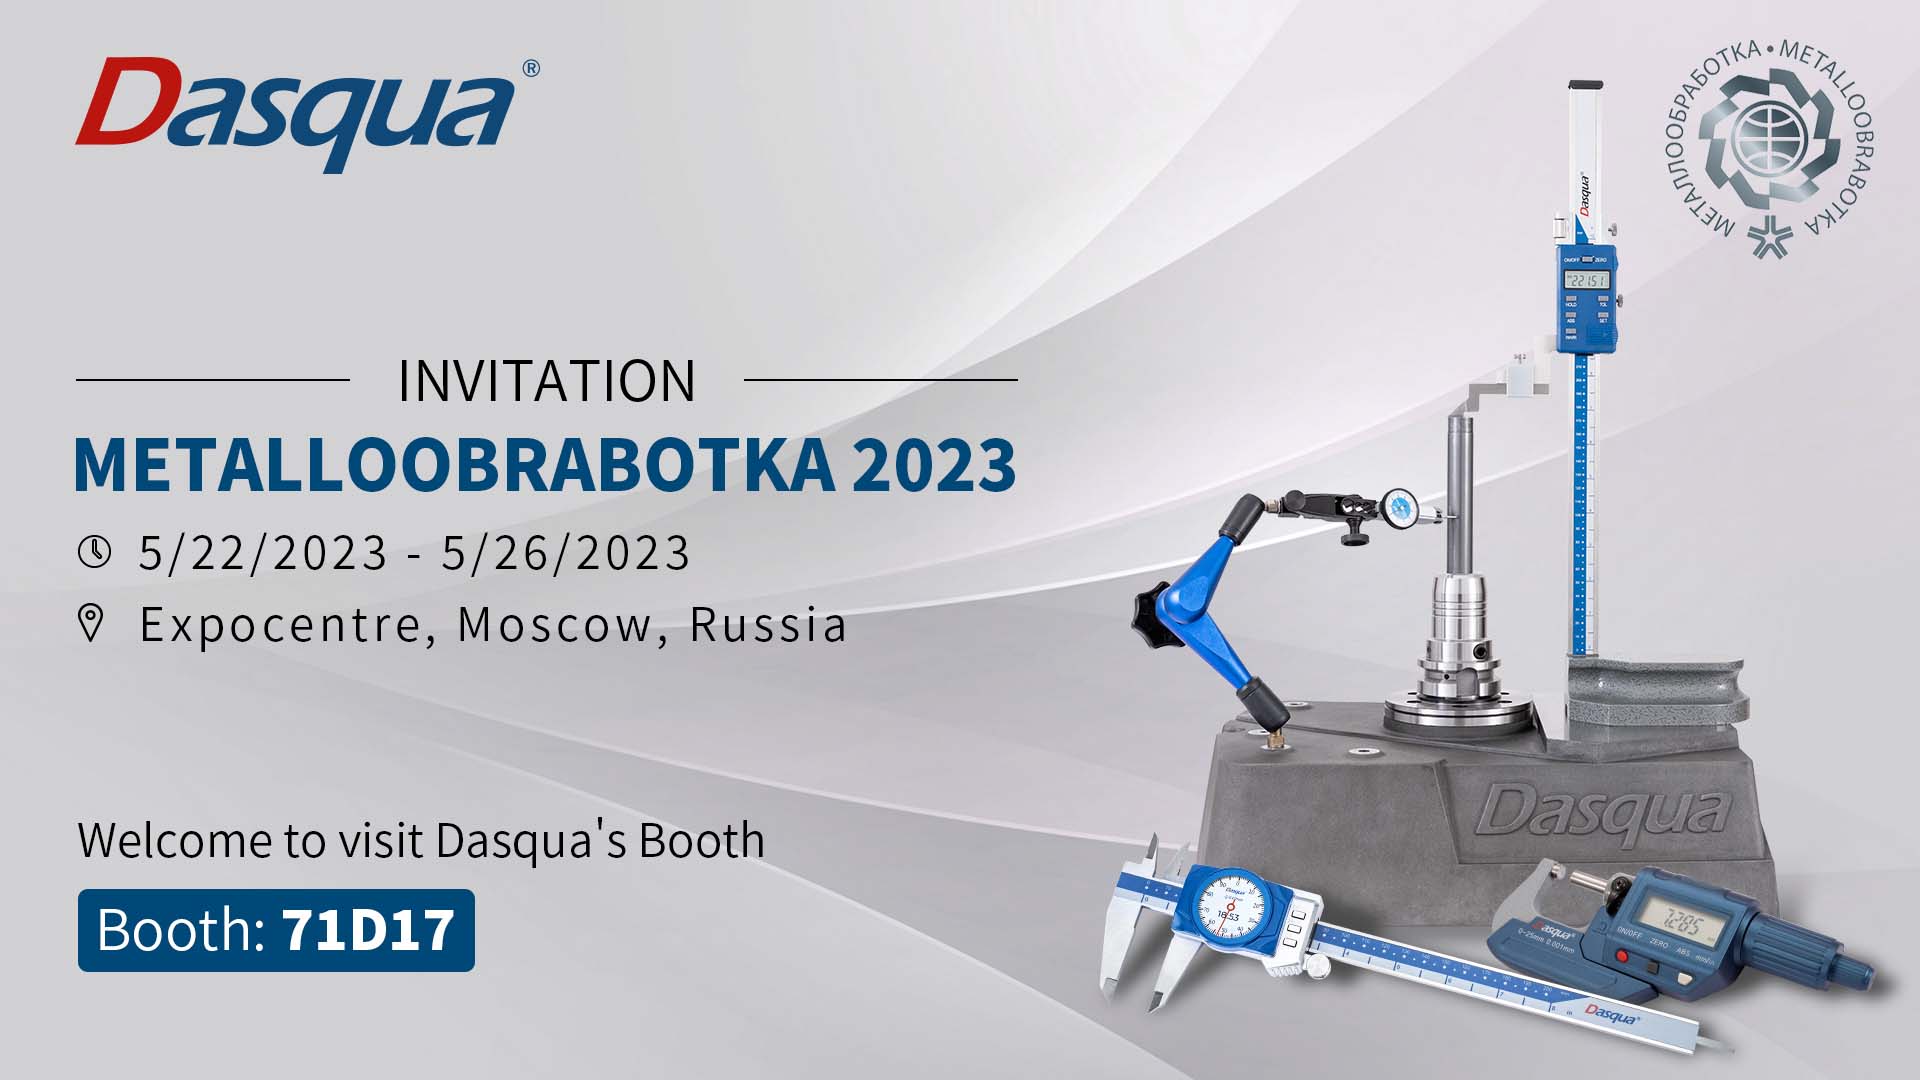 23. Metalloobrabotka Moscoviae - Internationalis Exhibitionis Materiae Processus Technologies, Machinae et Instrumenti